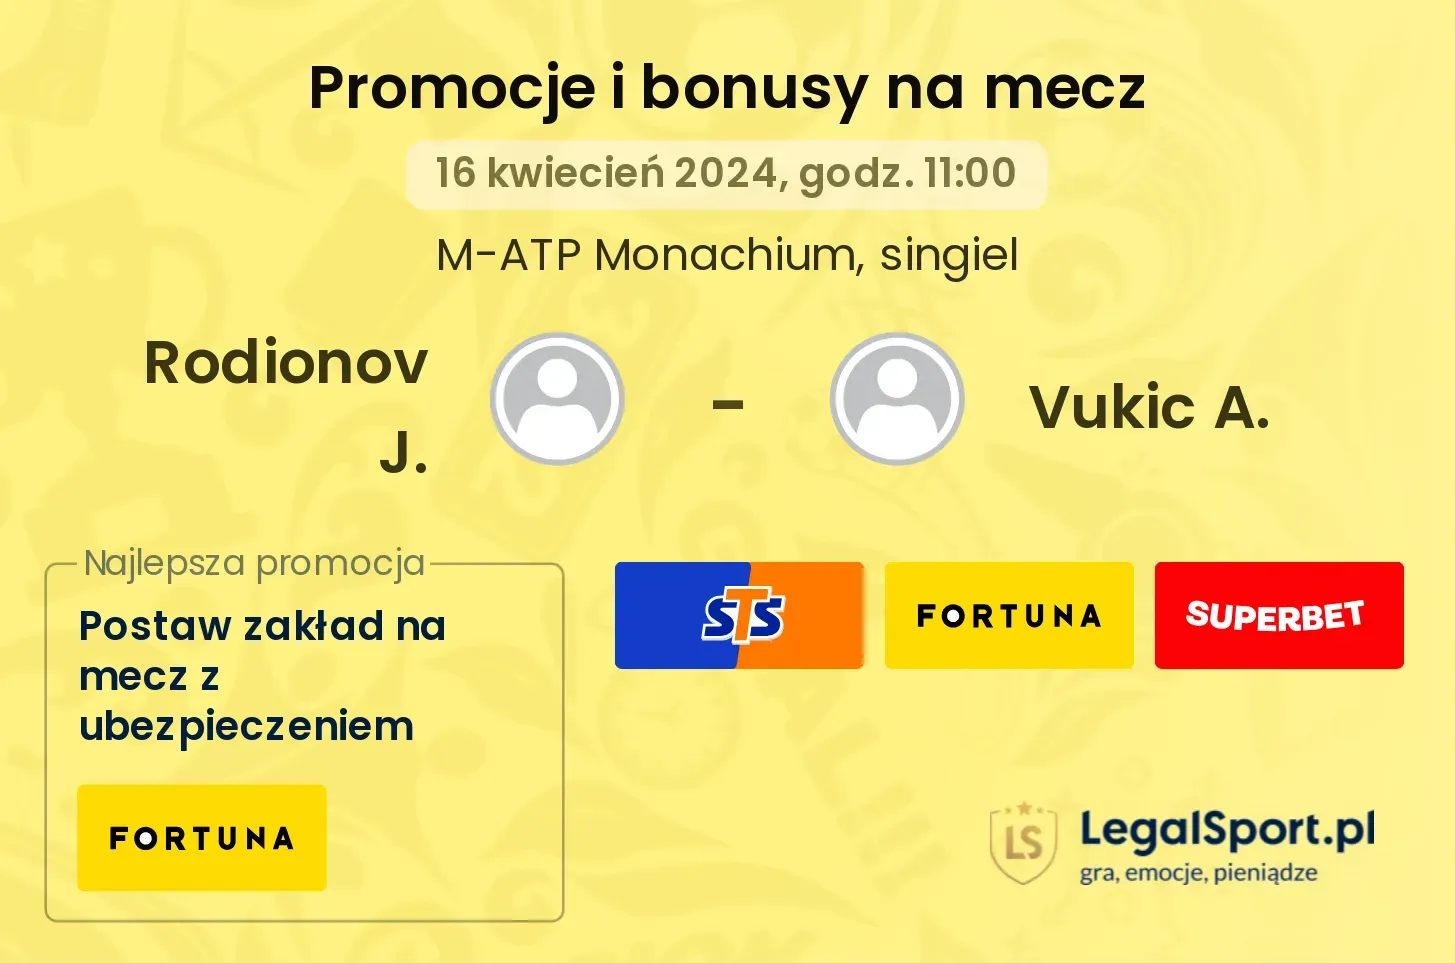 Rodionov J. - Vukic A. promocje bonusy na mecz